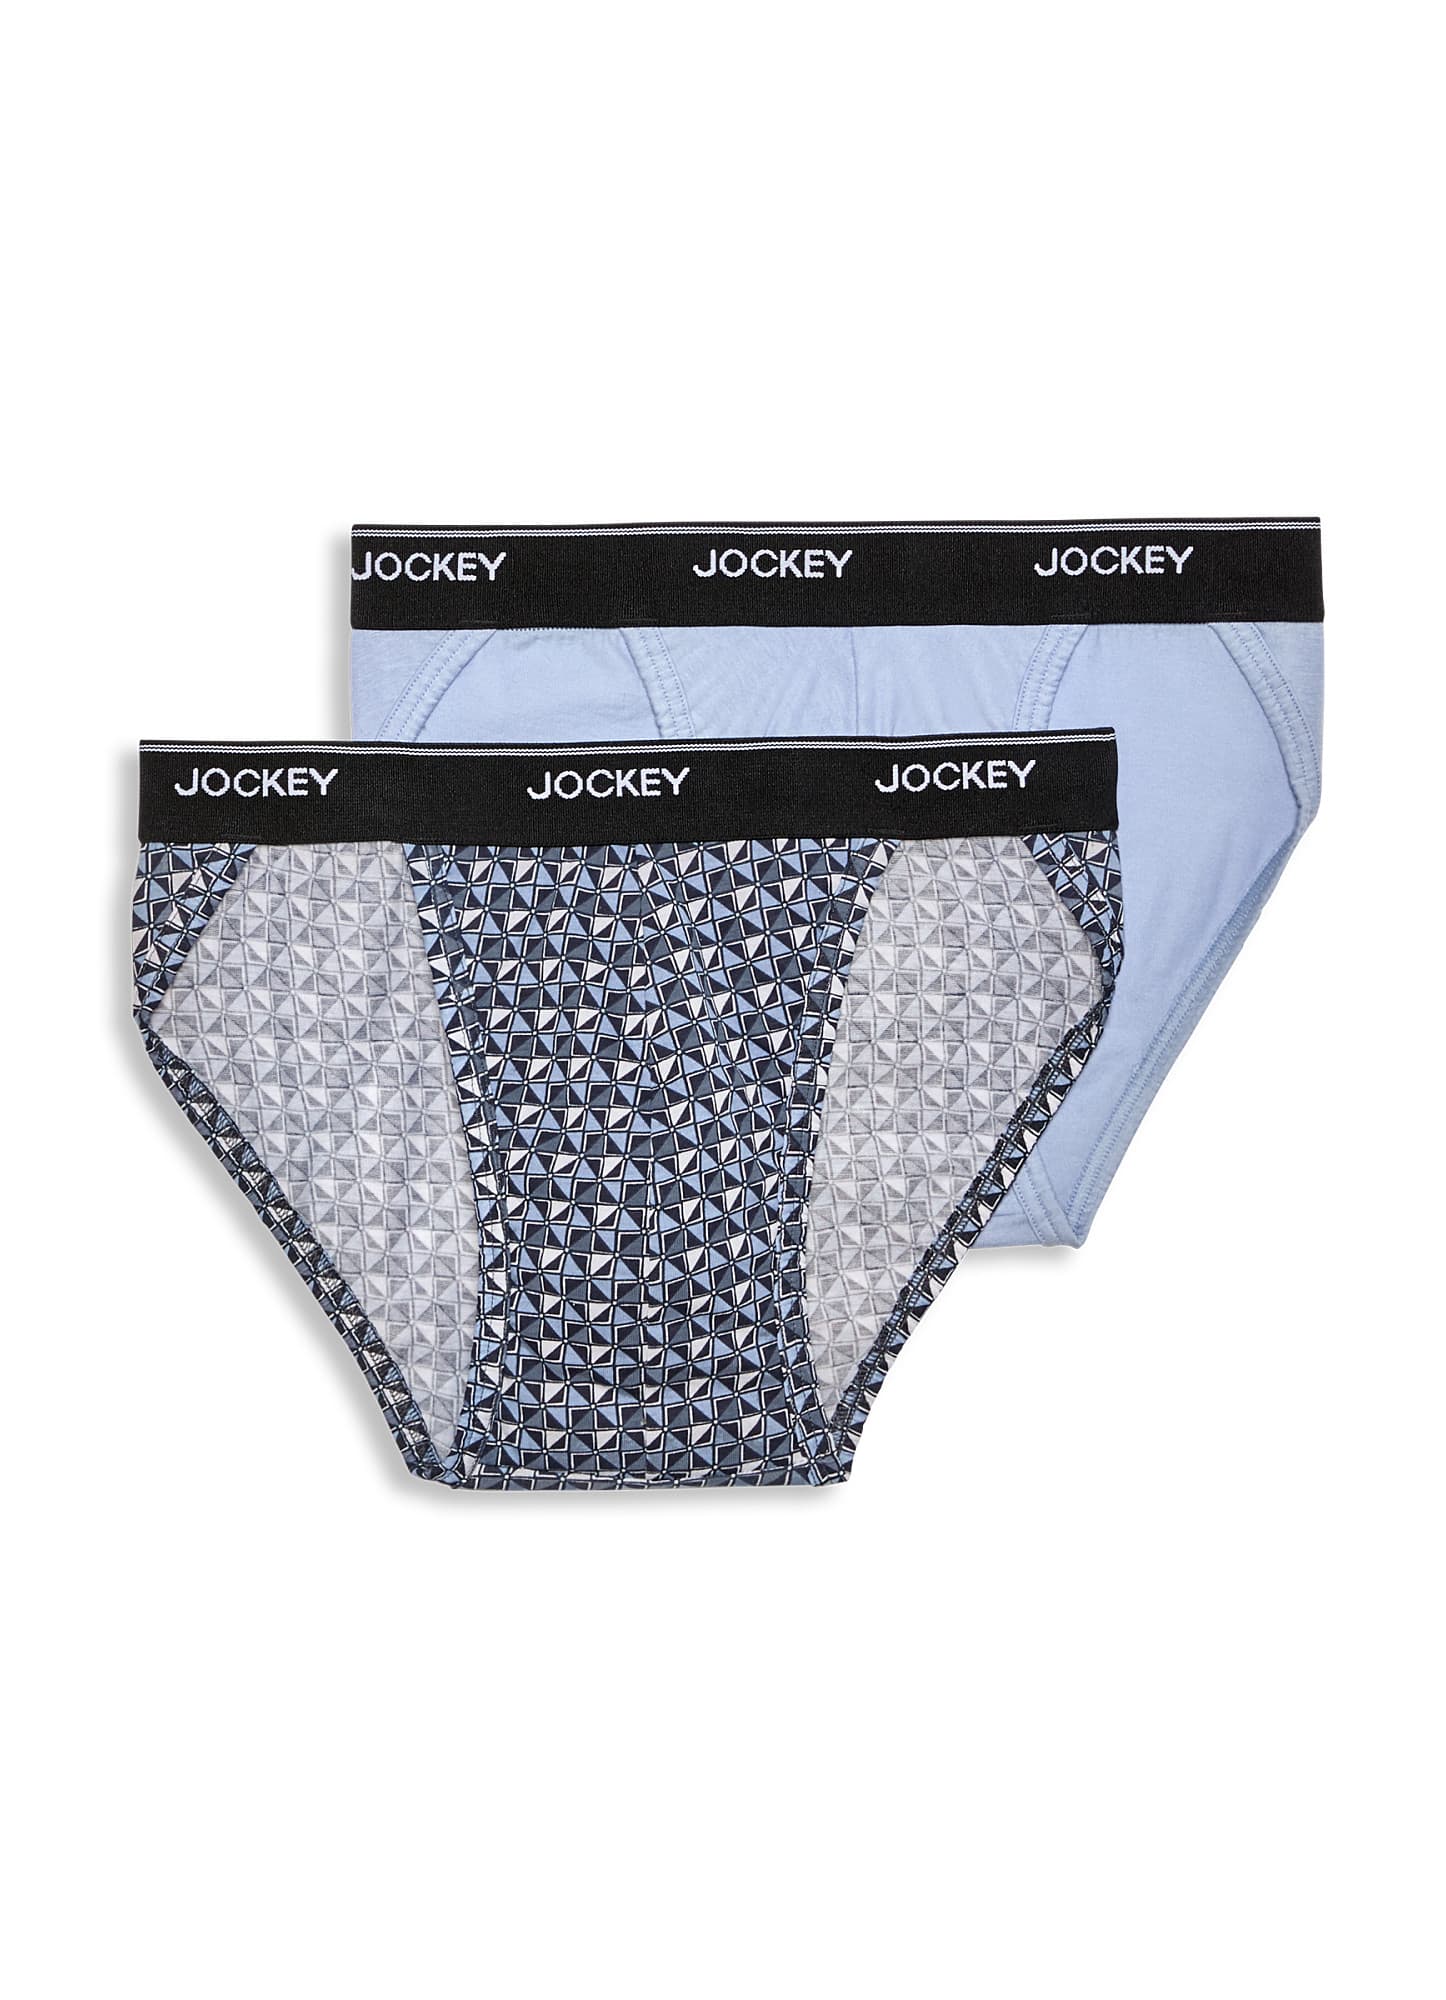 Jockey Men's Underwear Elance Bikini - 3 Pack, Black, S at